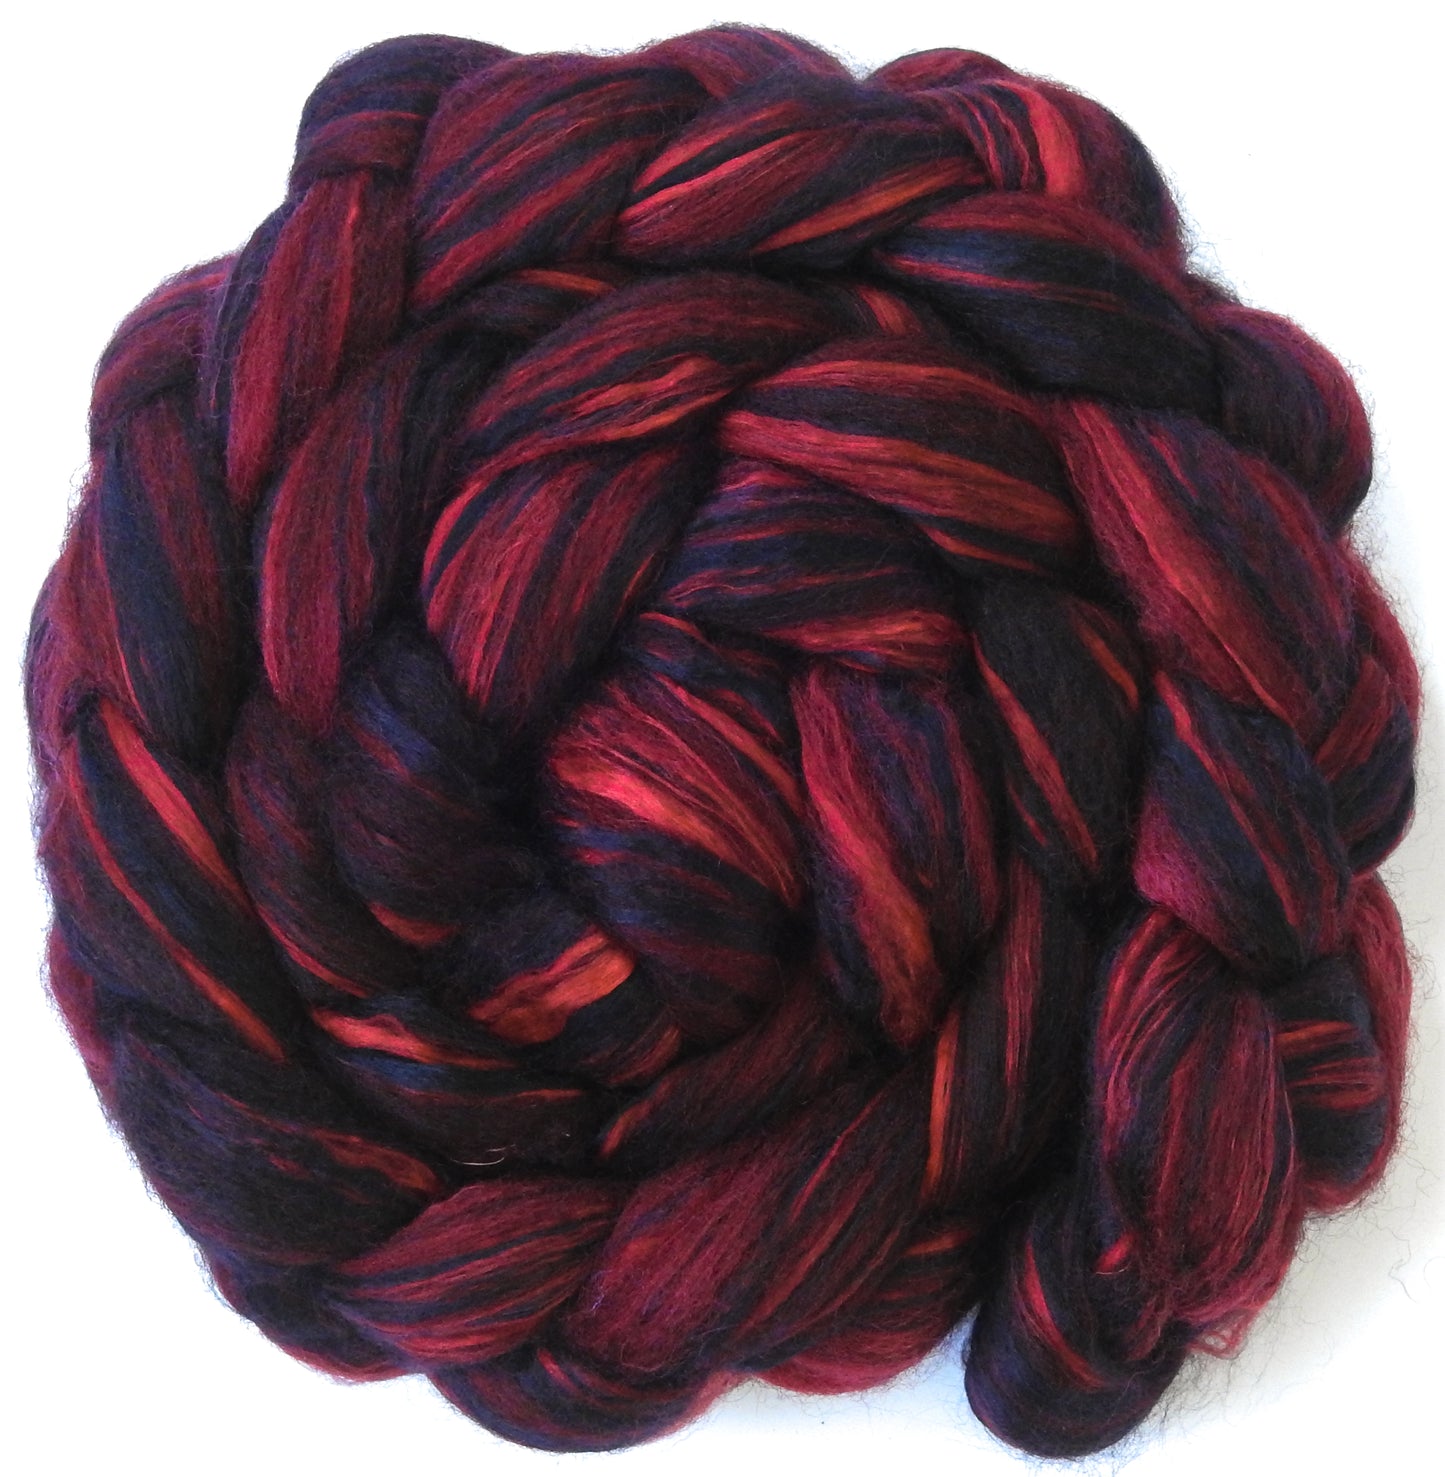 Crimson - Batt in a Braid #55- Shetland/ Mulberry Silk/ Black Bamboo (50/25/25)